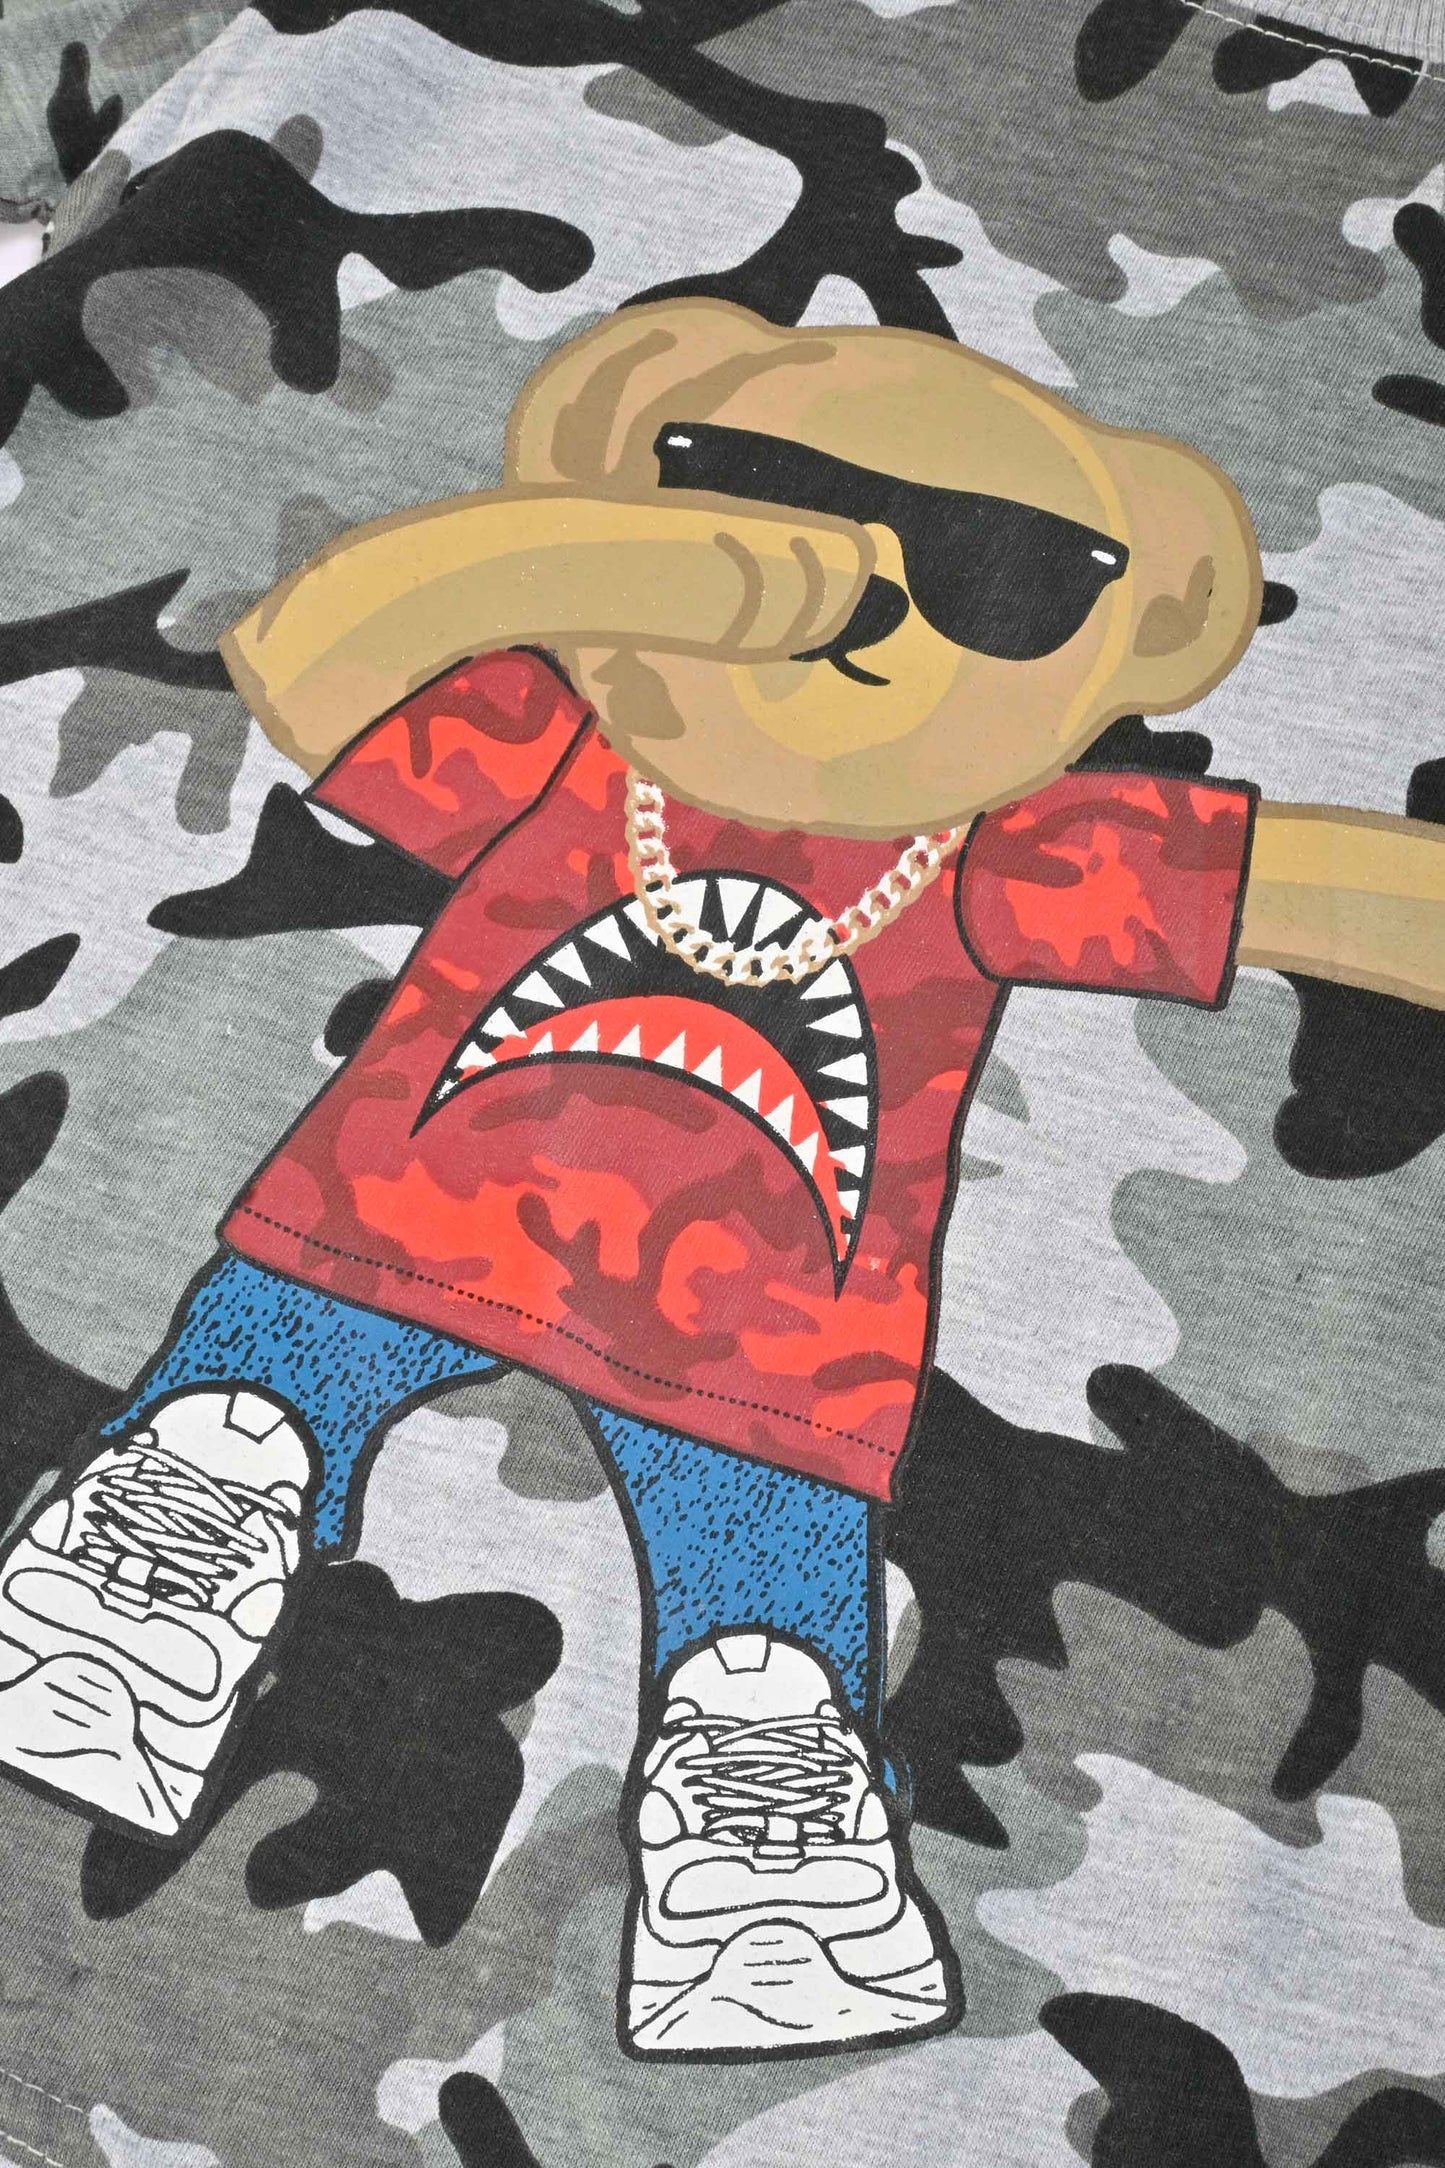 Max 21 Kid's Camo Style Bear Printed Long Sleeve Tee Shirt